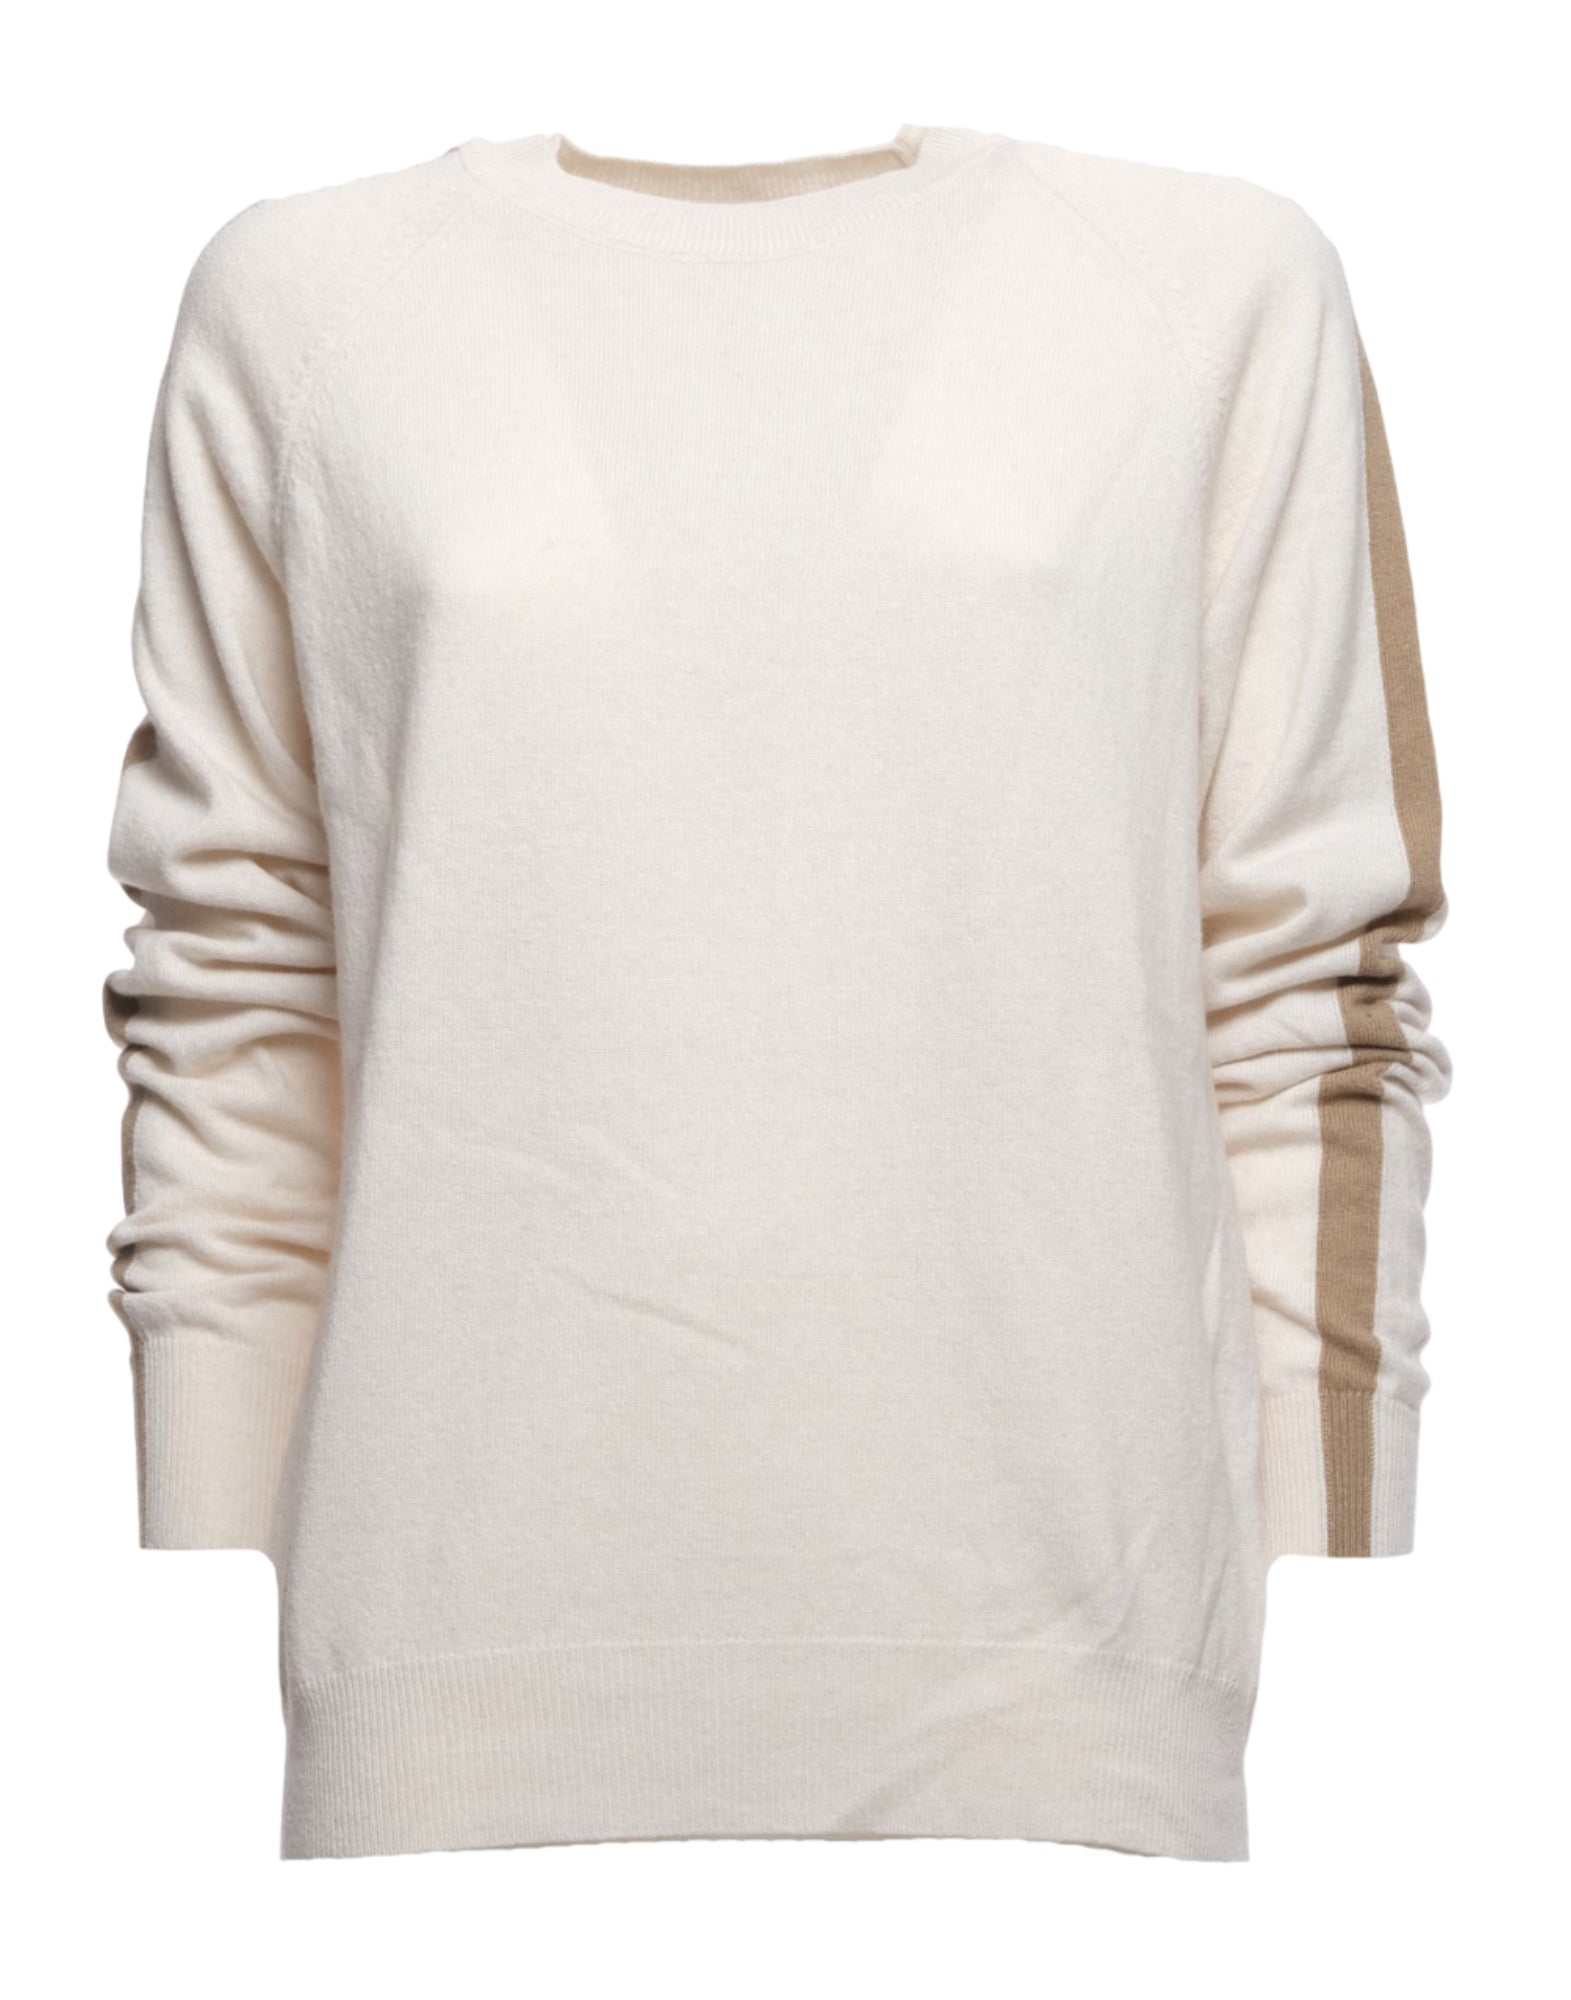 Sweater for woman MGKD03001 PANNA Akep